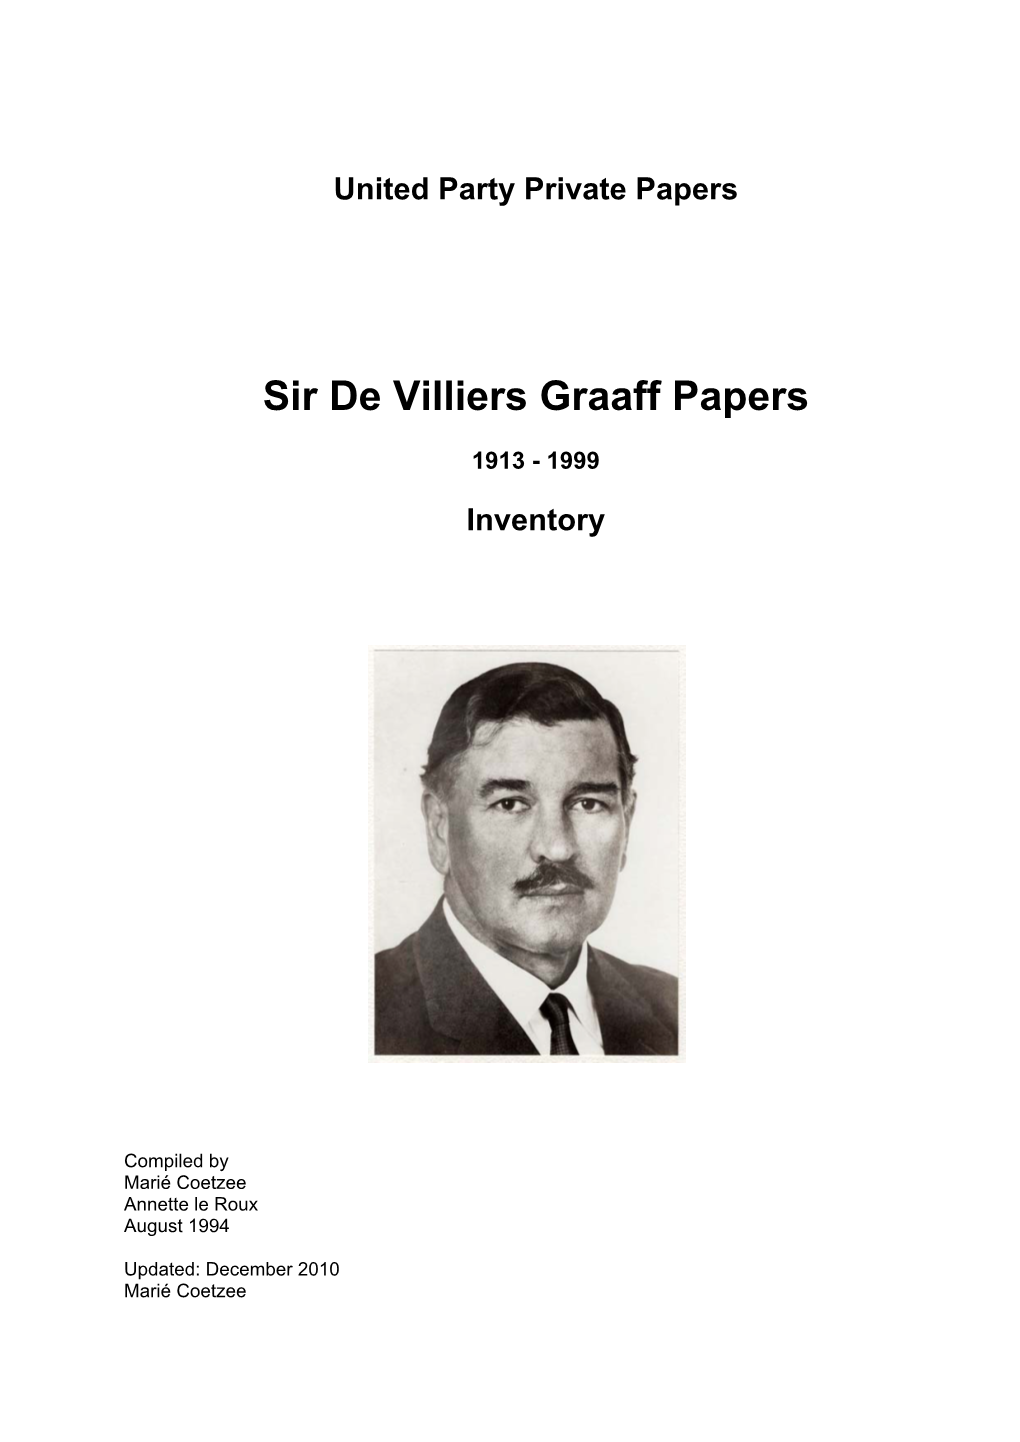 Sir De Villiers Graaff Papers